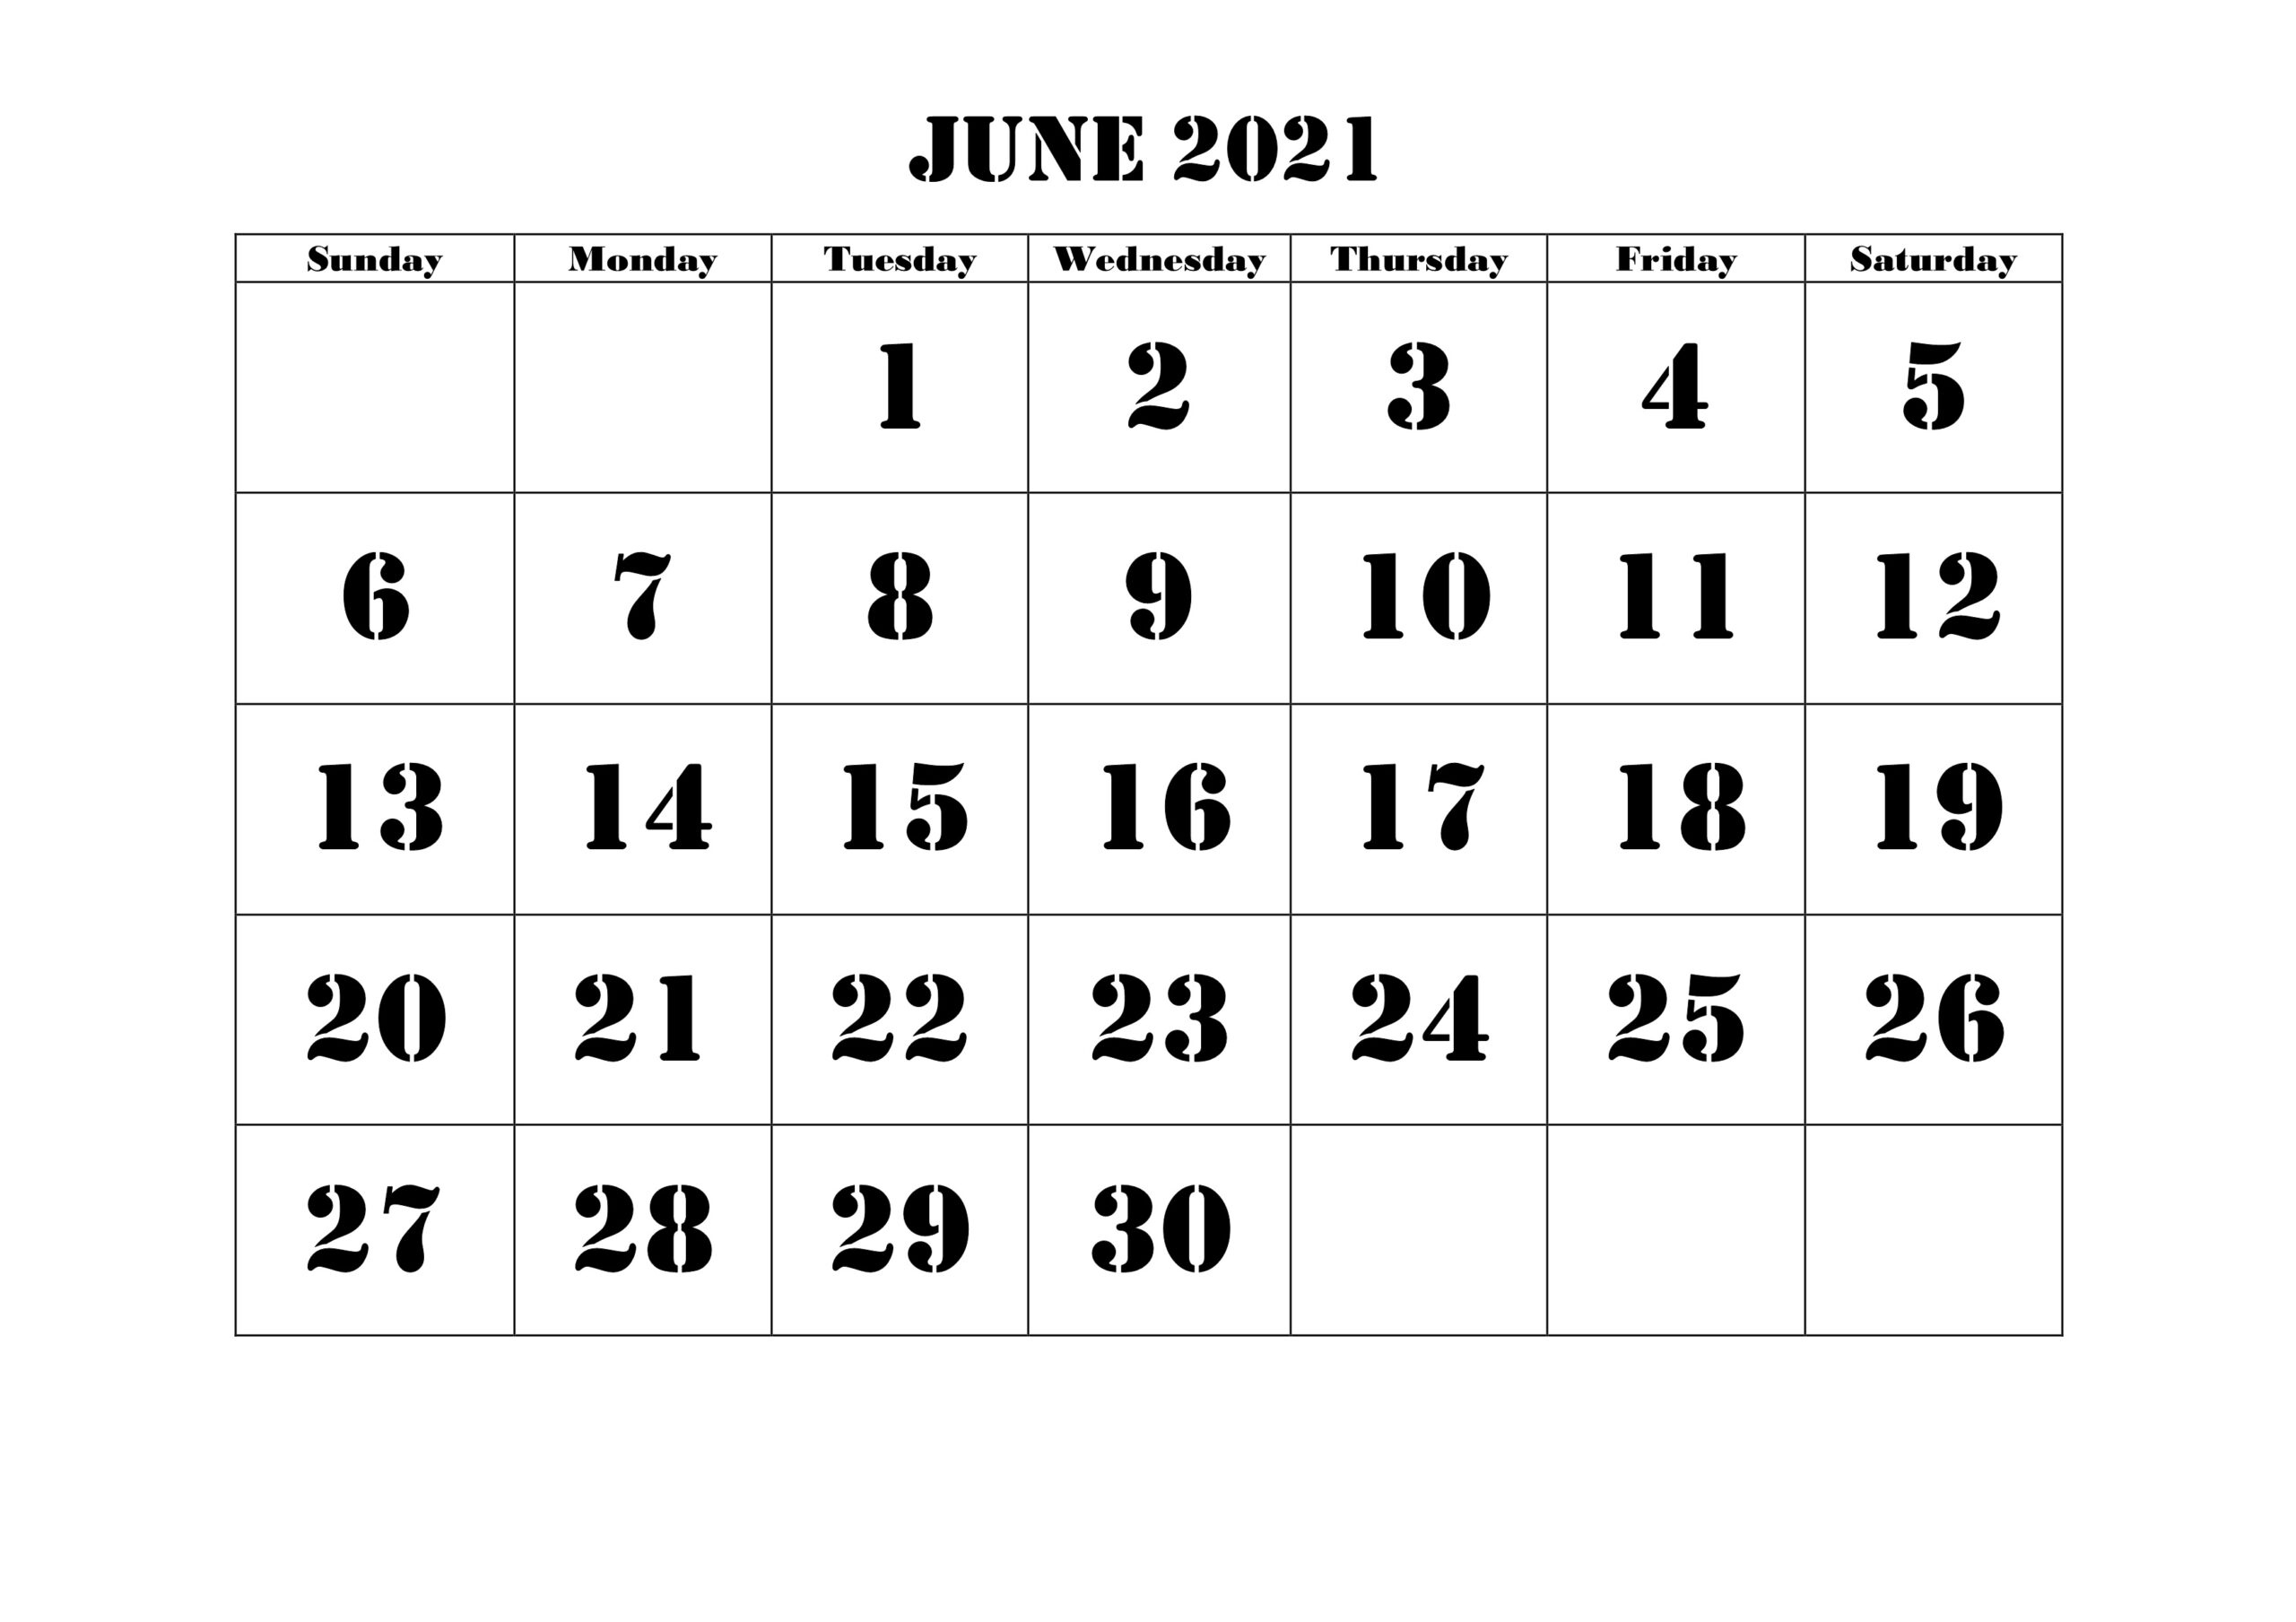 Blank June 2021 Calendar Make Schedule - Thecalendarpedia Printable June 2021 Calendar